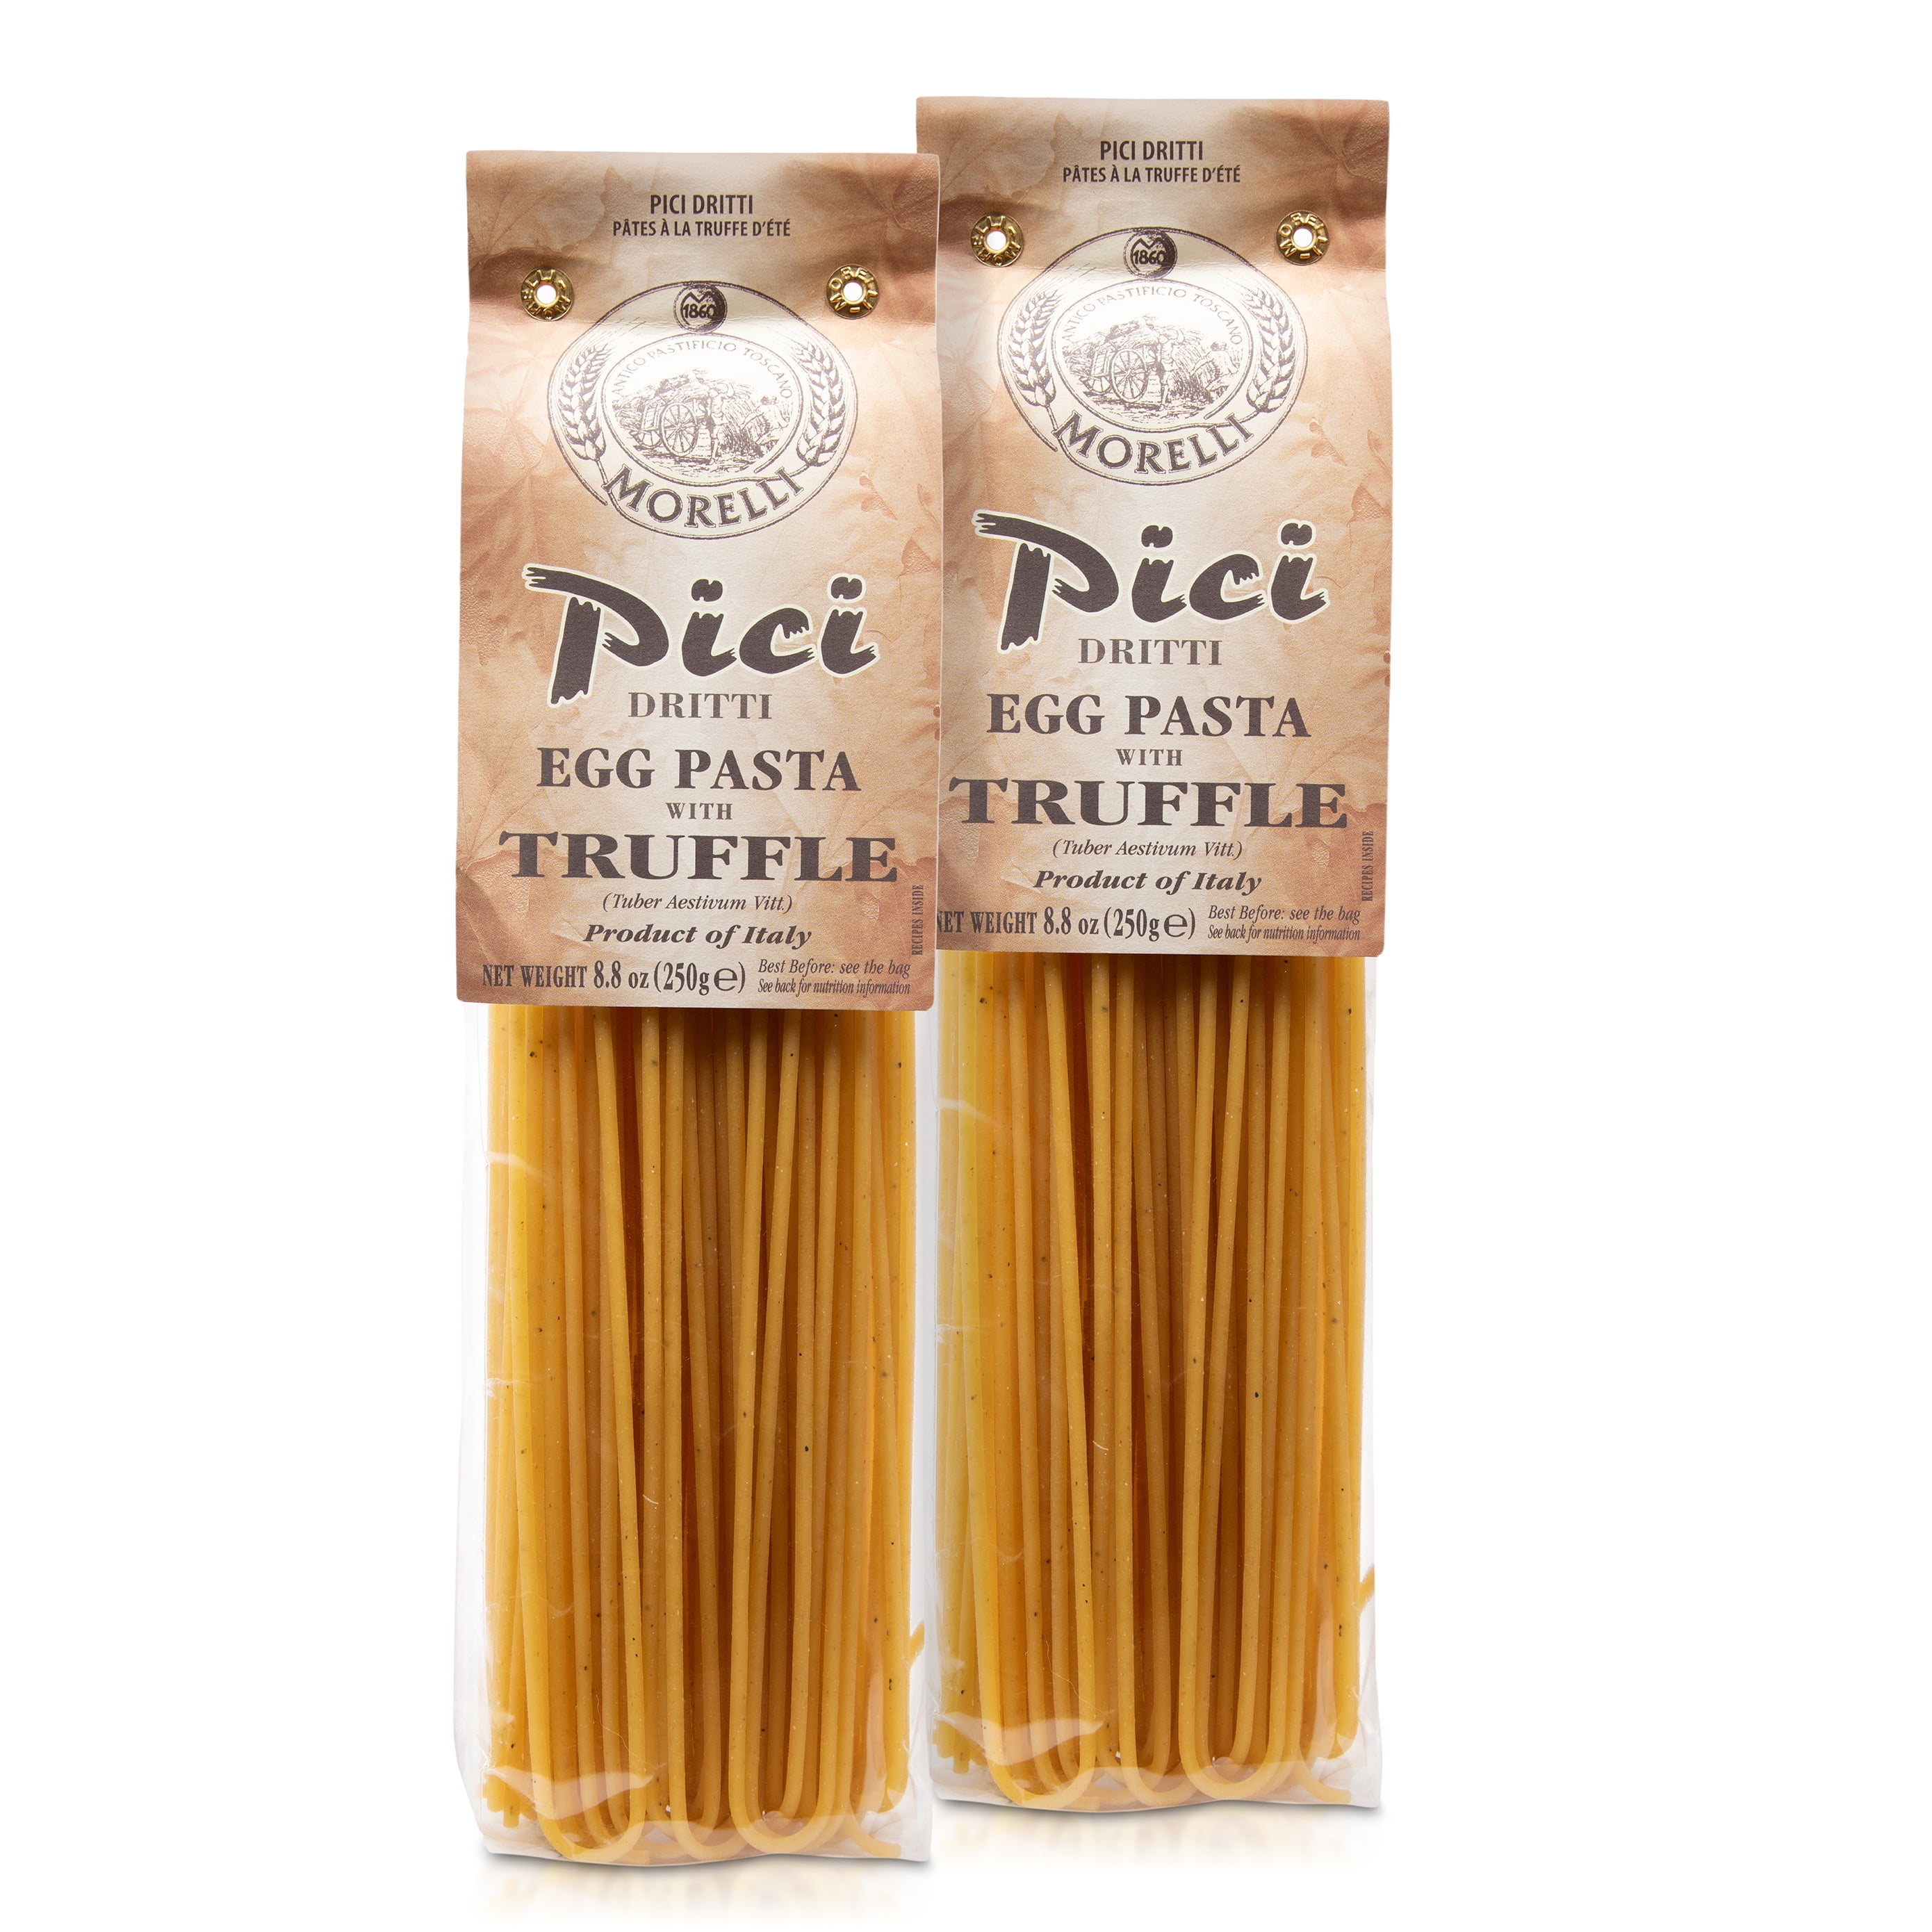 Morelli Pici Pasta Noodles - Premium Egg Pasta With Truffle, Italian Pasta  from Italy, Gourmet Pasta, Handmade, Imported Italian Pasta Noodles, Durum  Wheat Semolina Pasta - 8.8 oz / 250g - Pack of 2